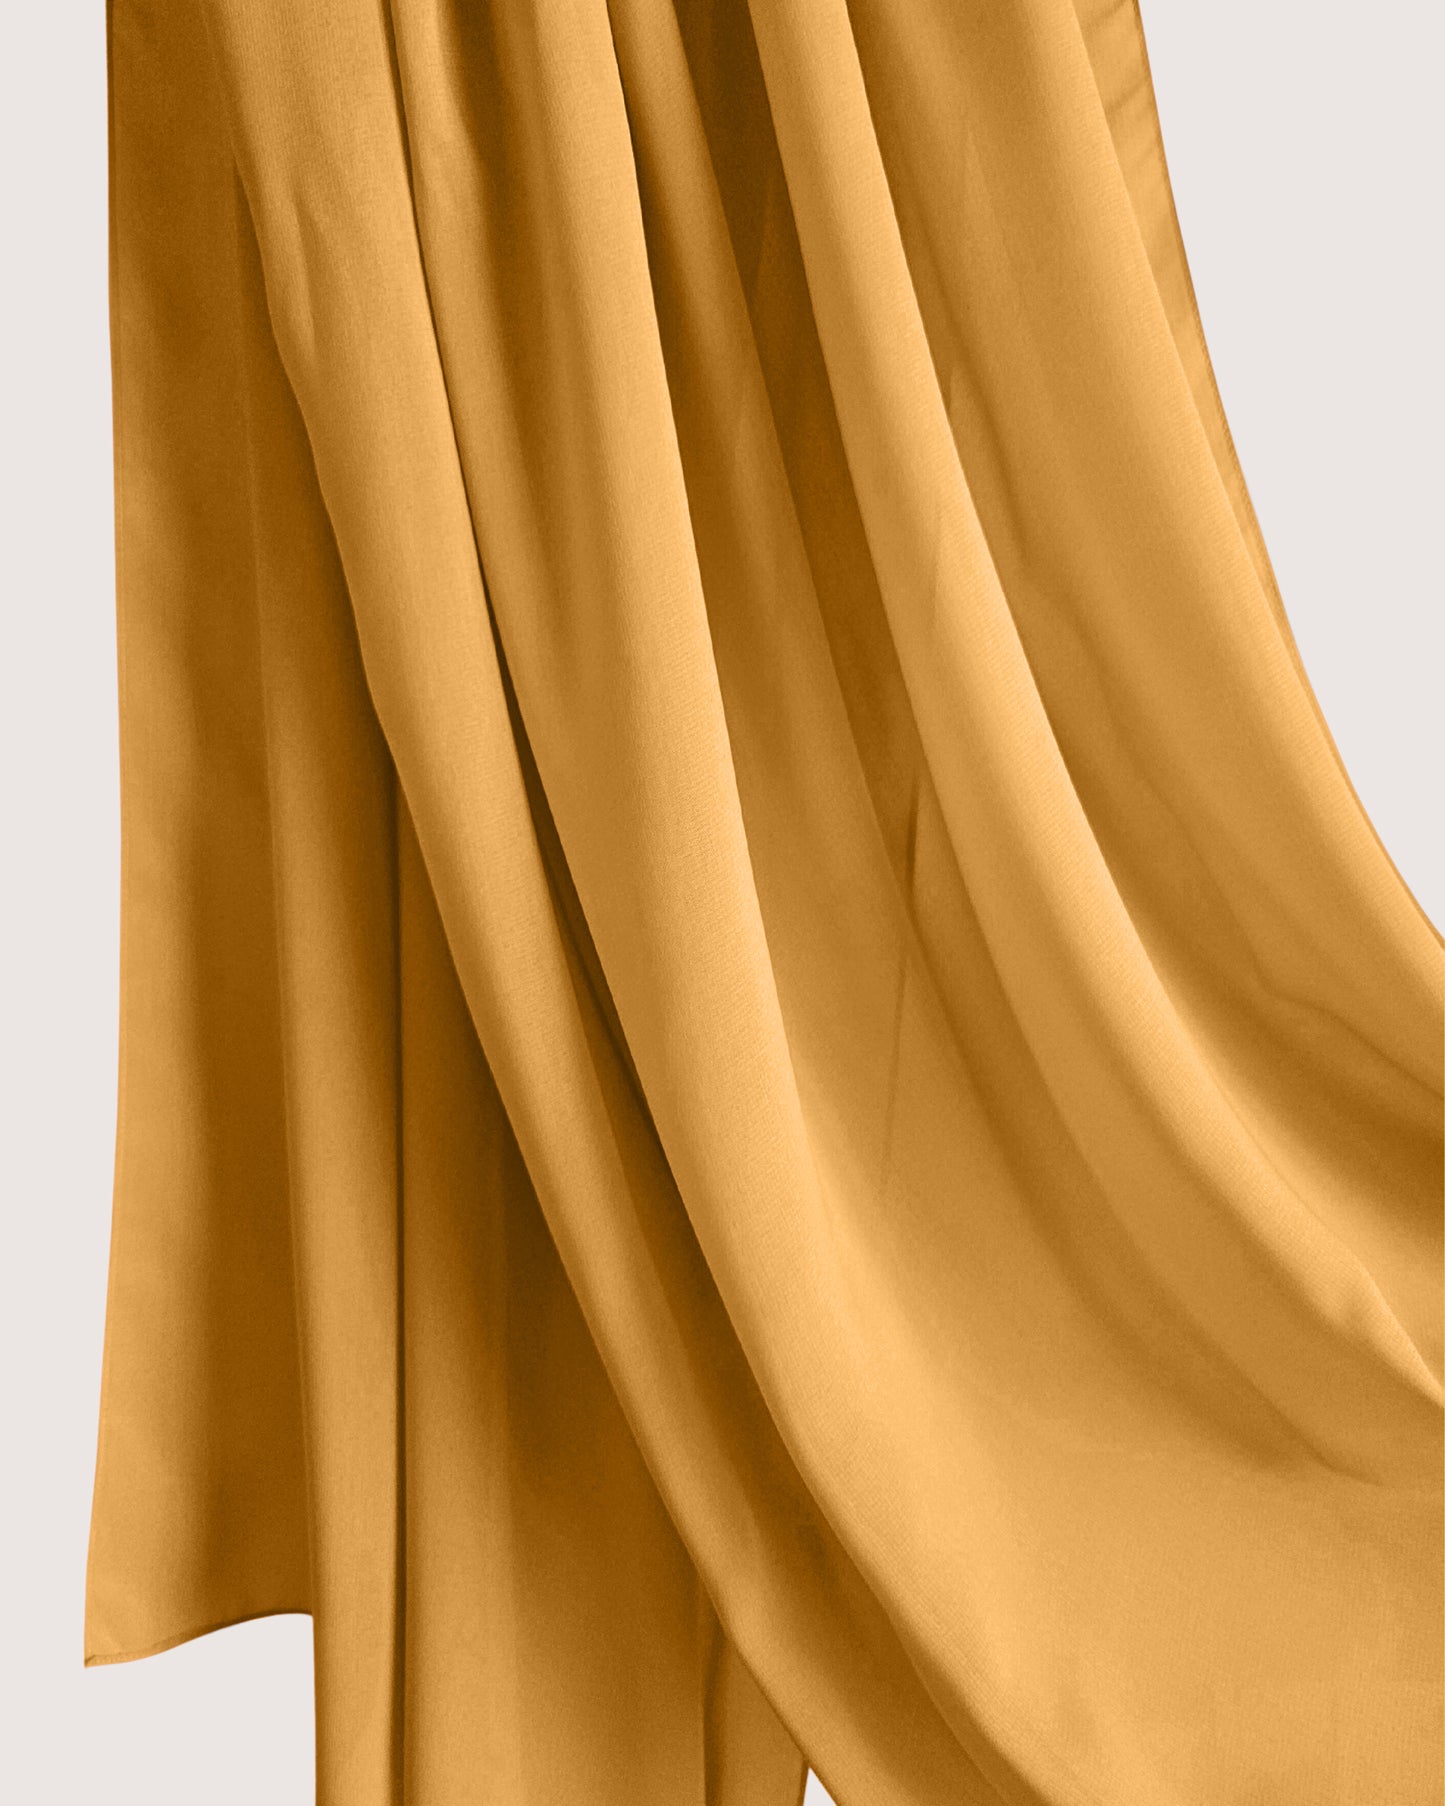 Premium marigold Chiffon Hijab Scarf